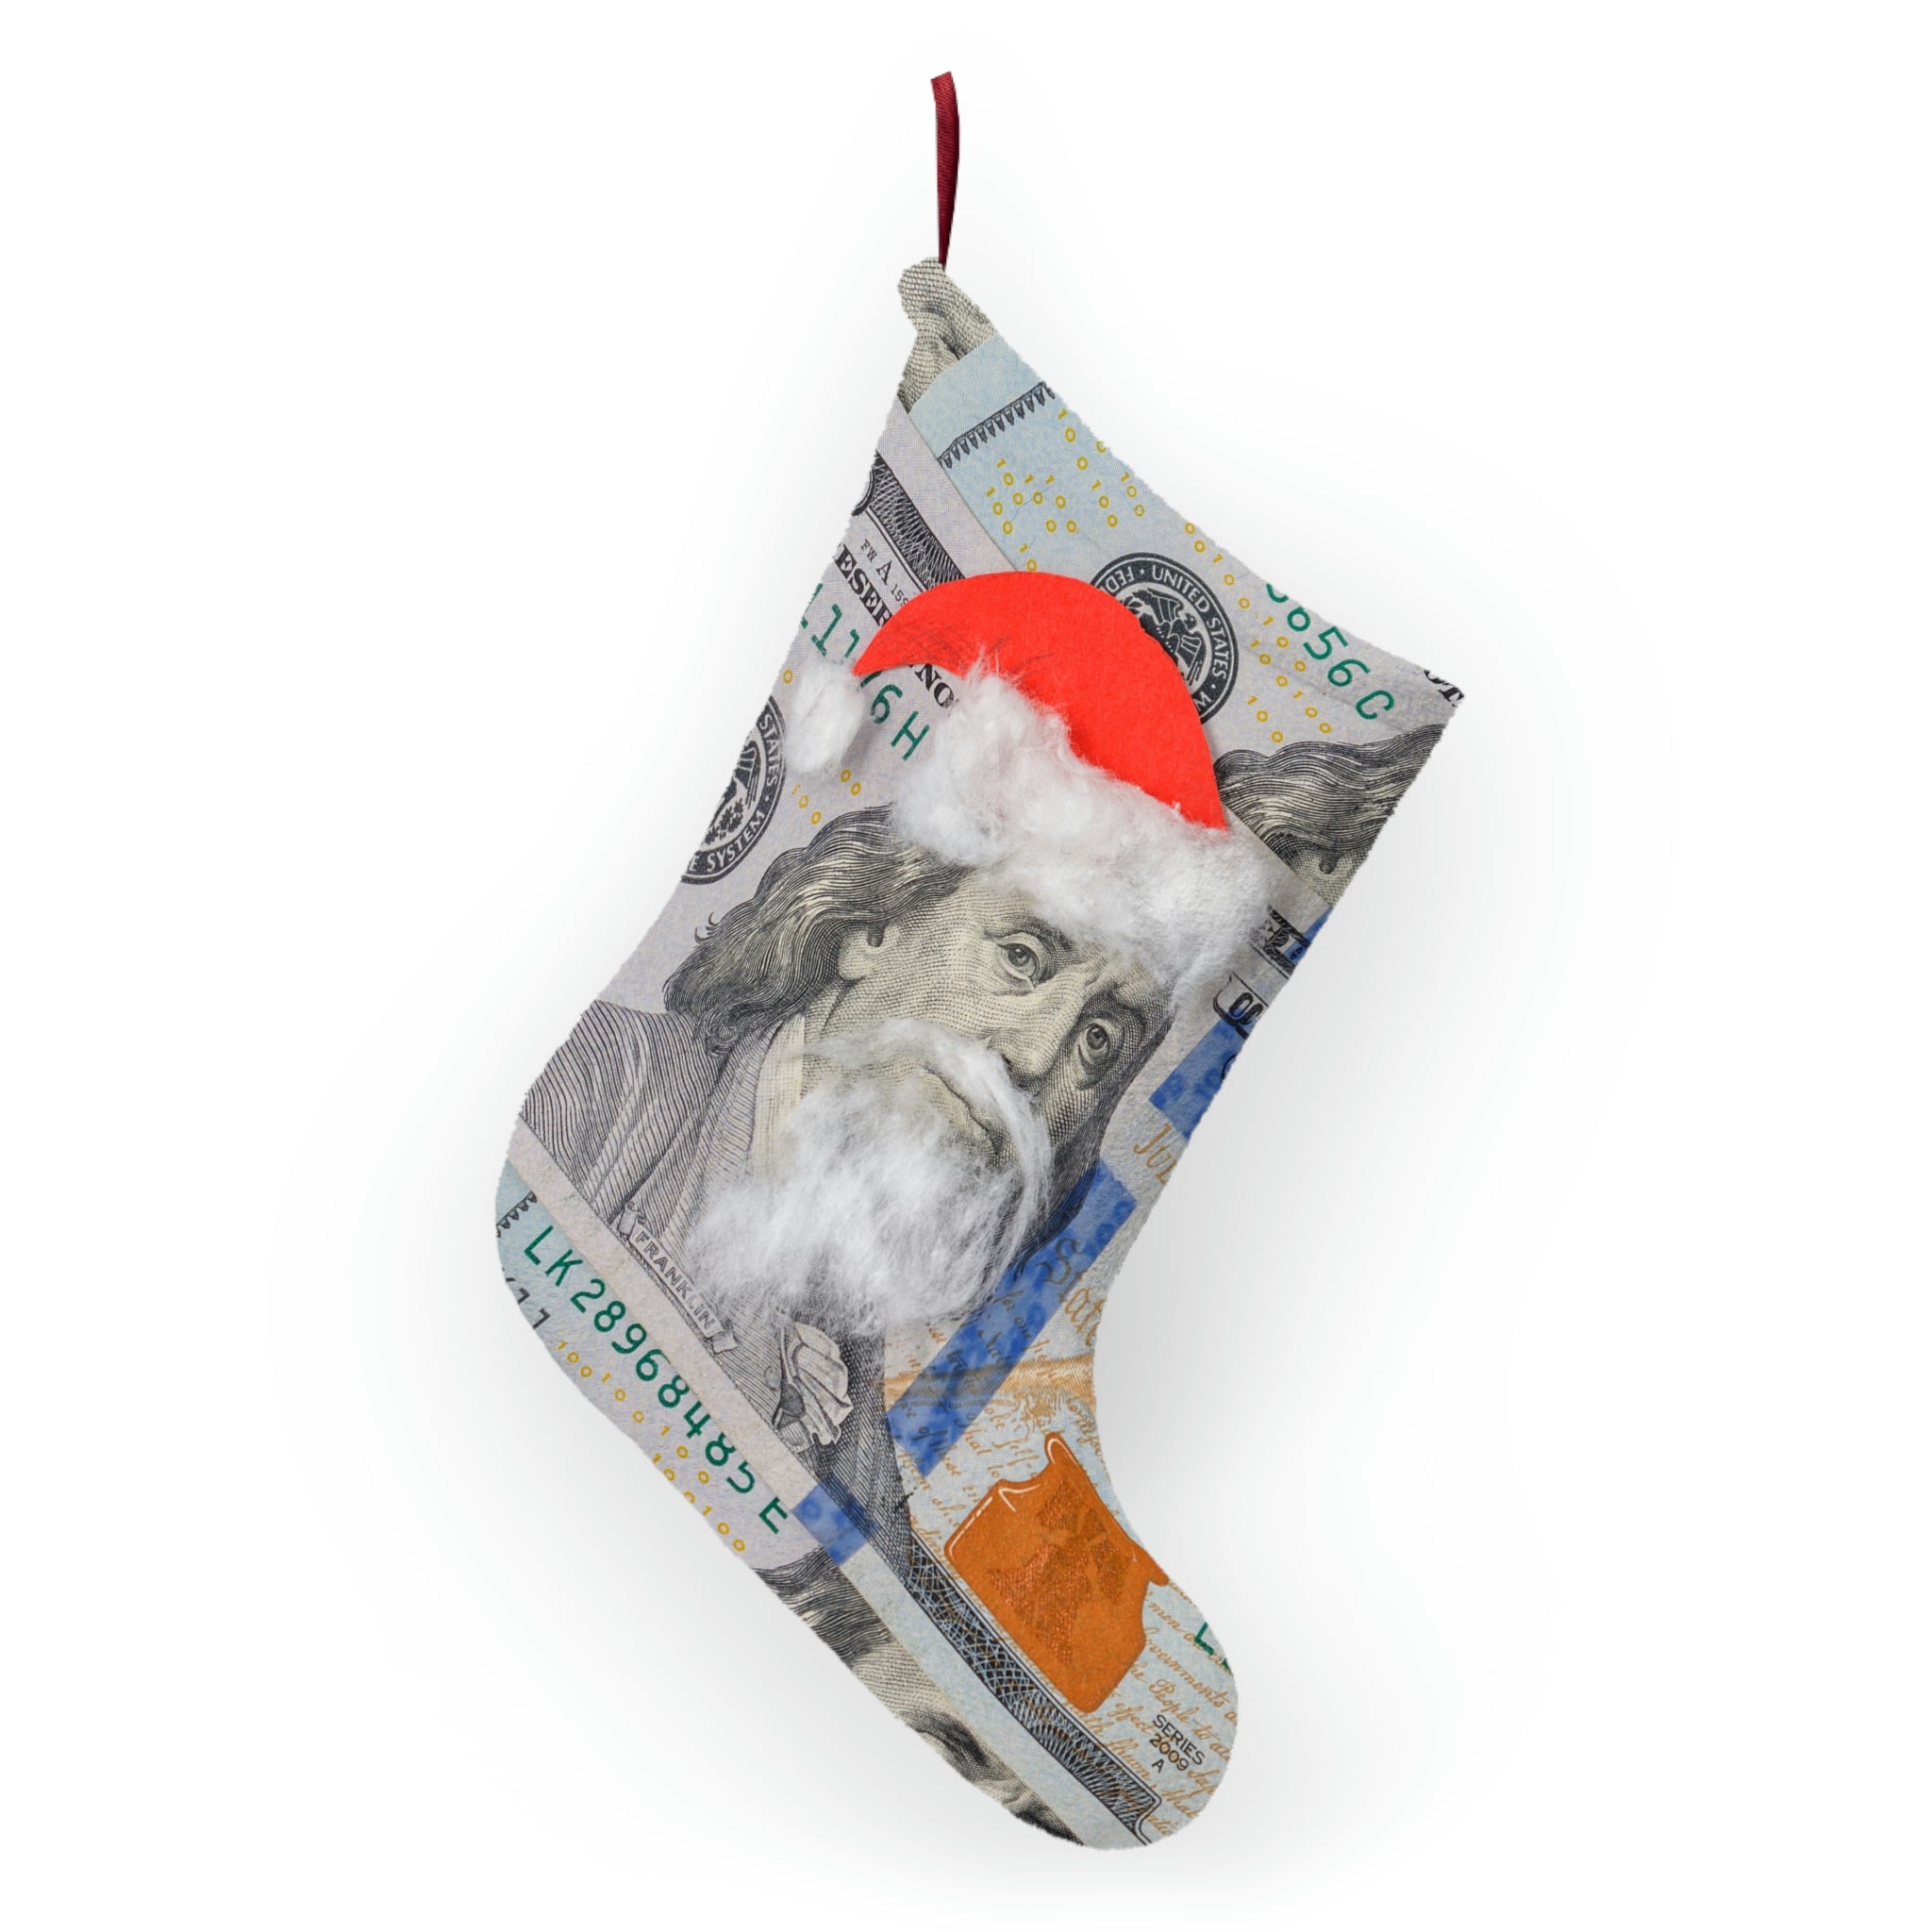 Benjamin Franklin Christmas Stockings